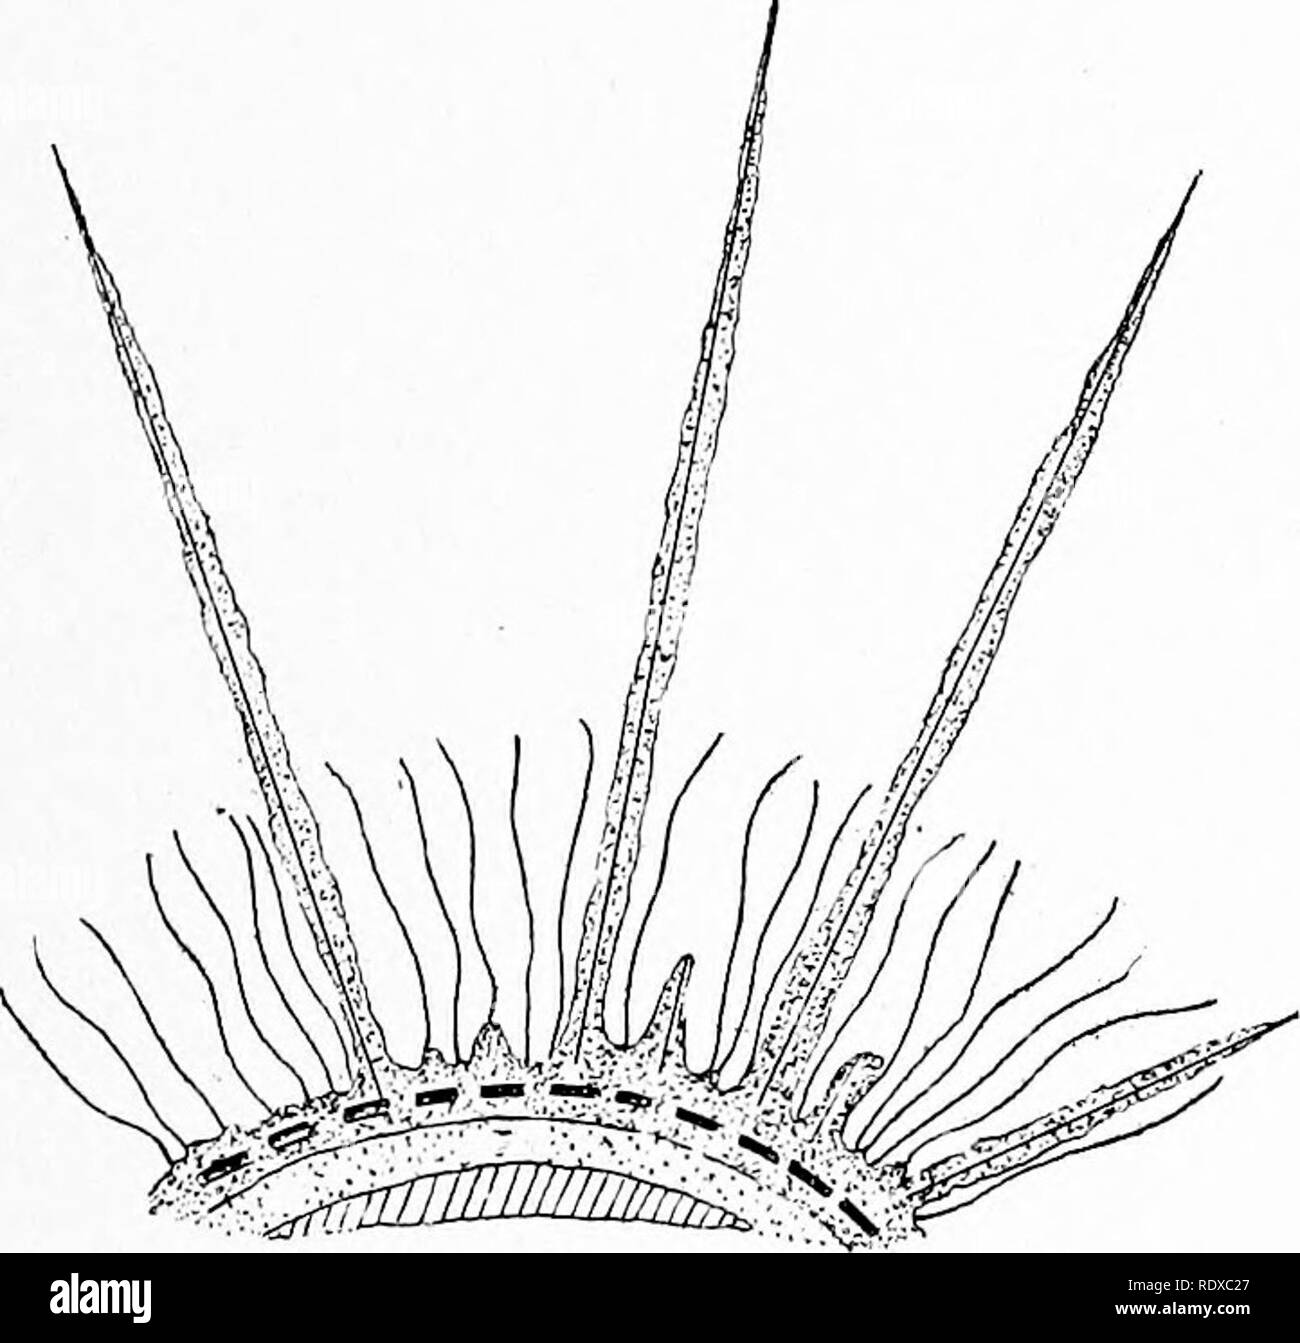 A radiolaria protozoa hi-res stock photography and images - Alamy